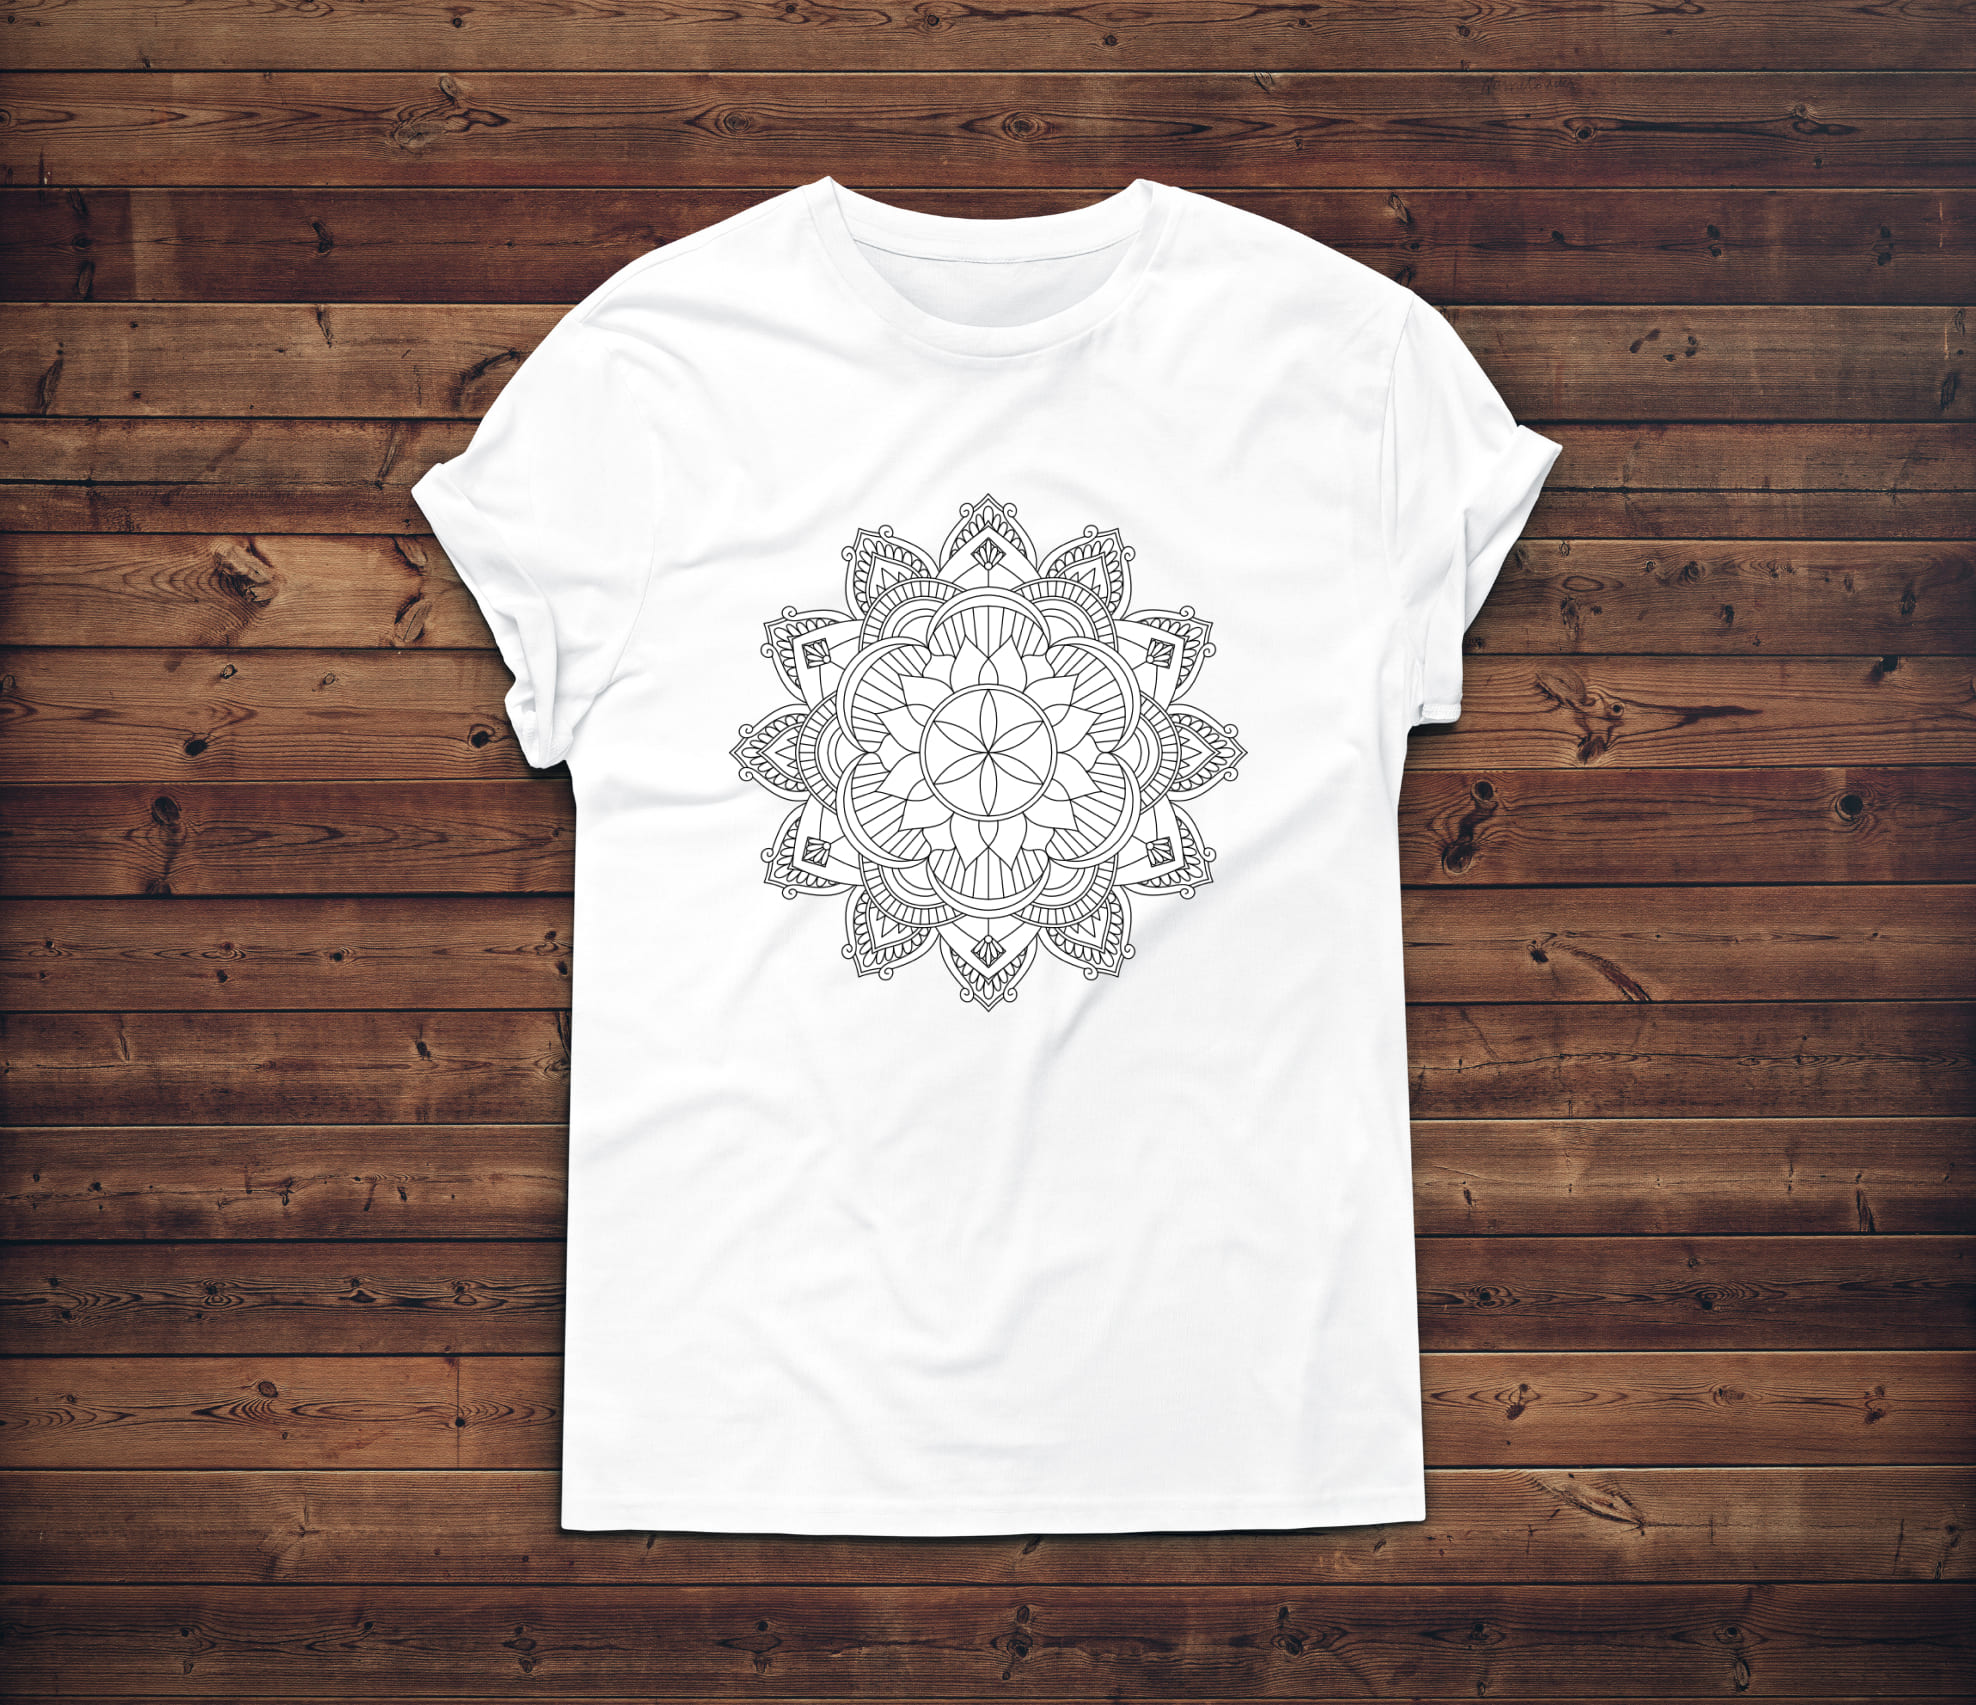 Beautiful blossom mandala on the white t-shirt.